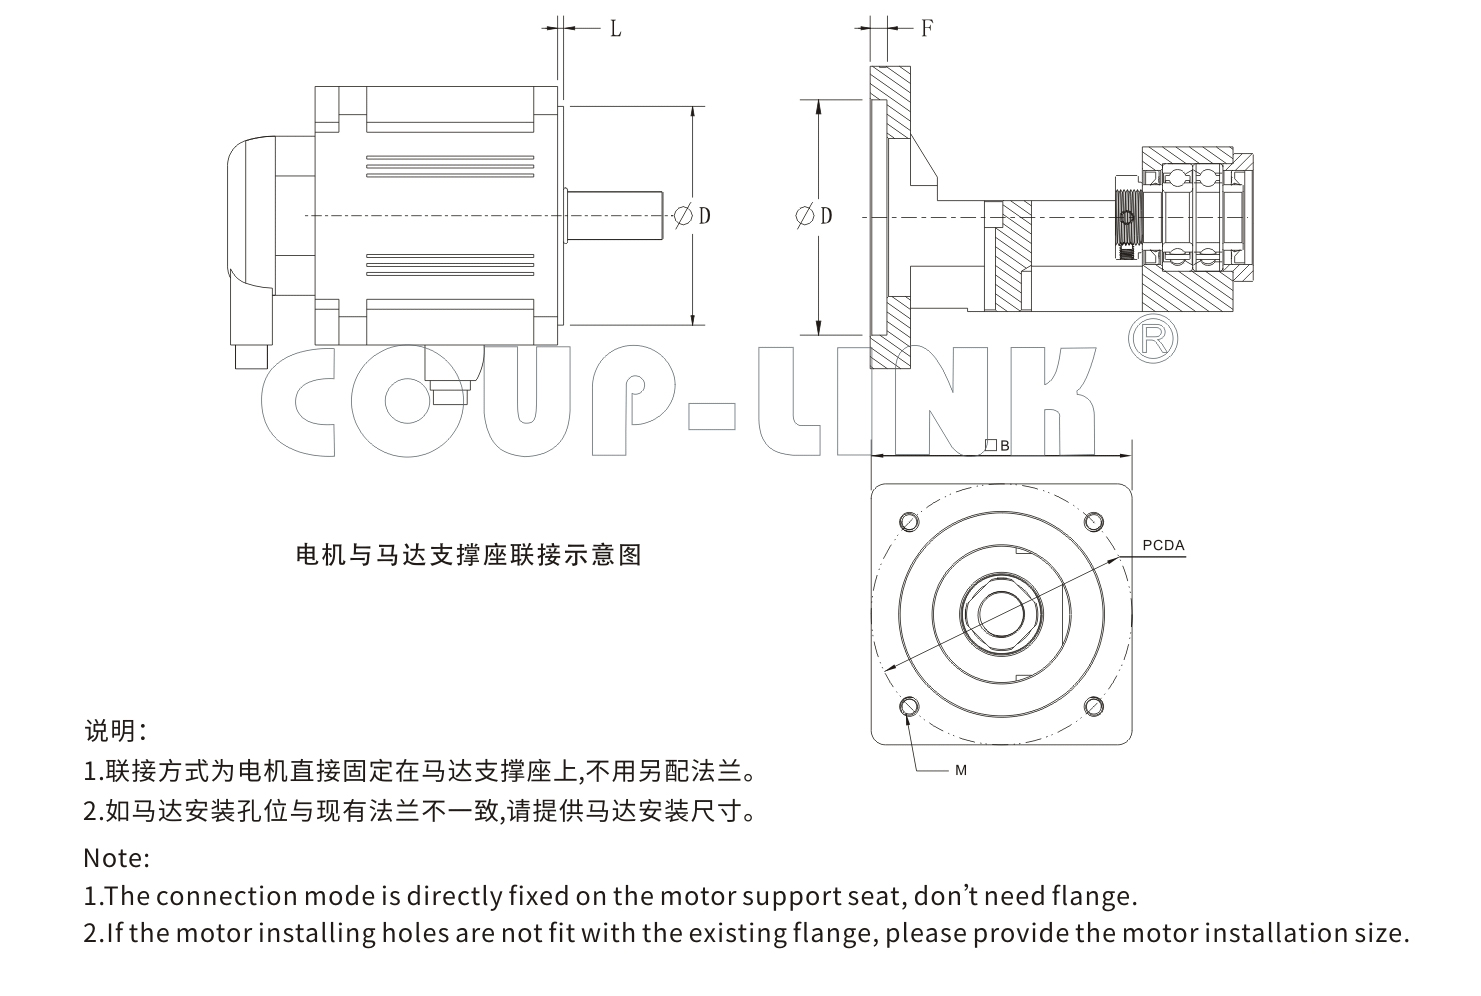 CLKZ 馬達支撐座（鑄鐵）_聯軸器種類-廣州菱科自動化設備有限公司